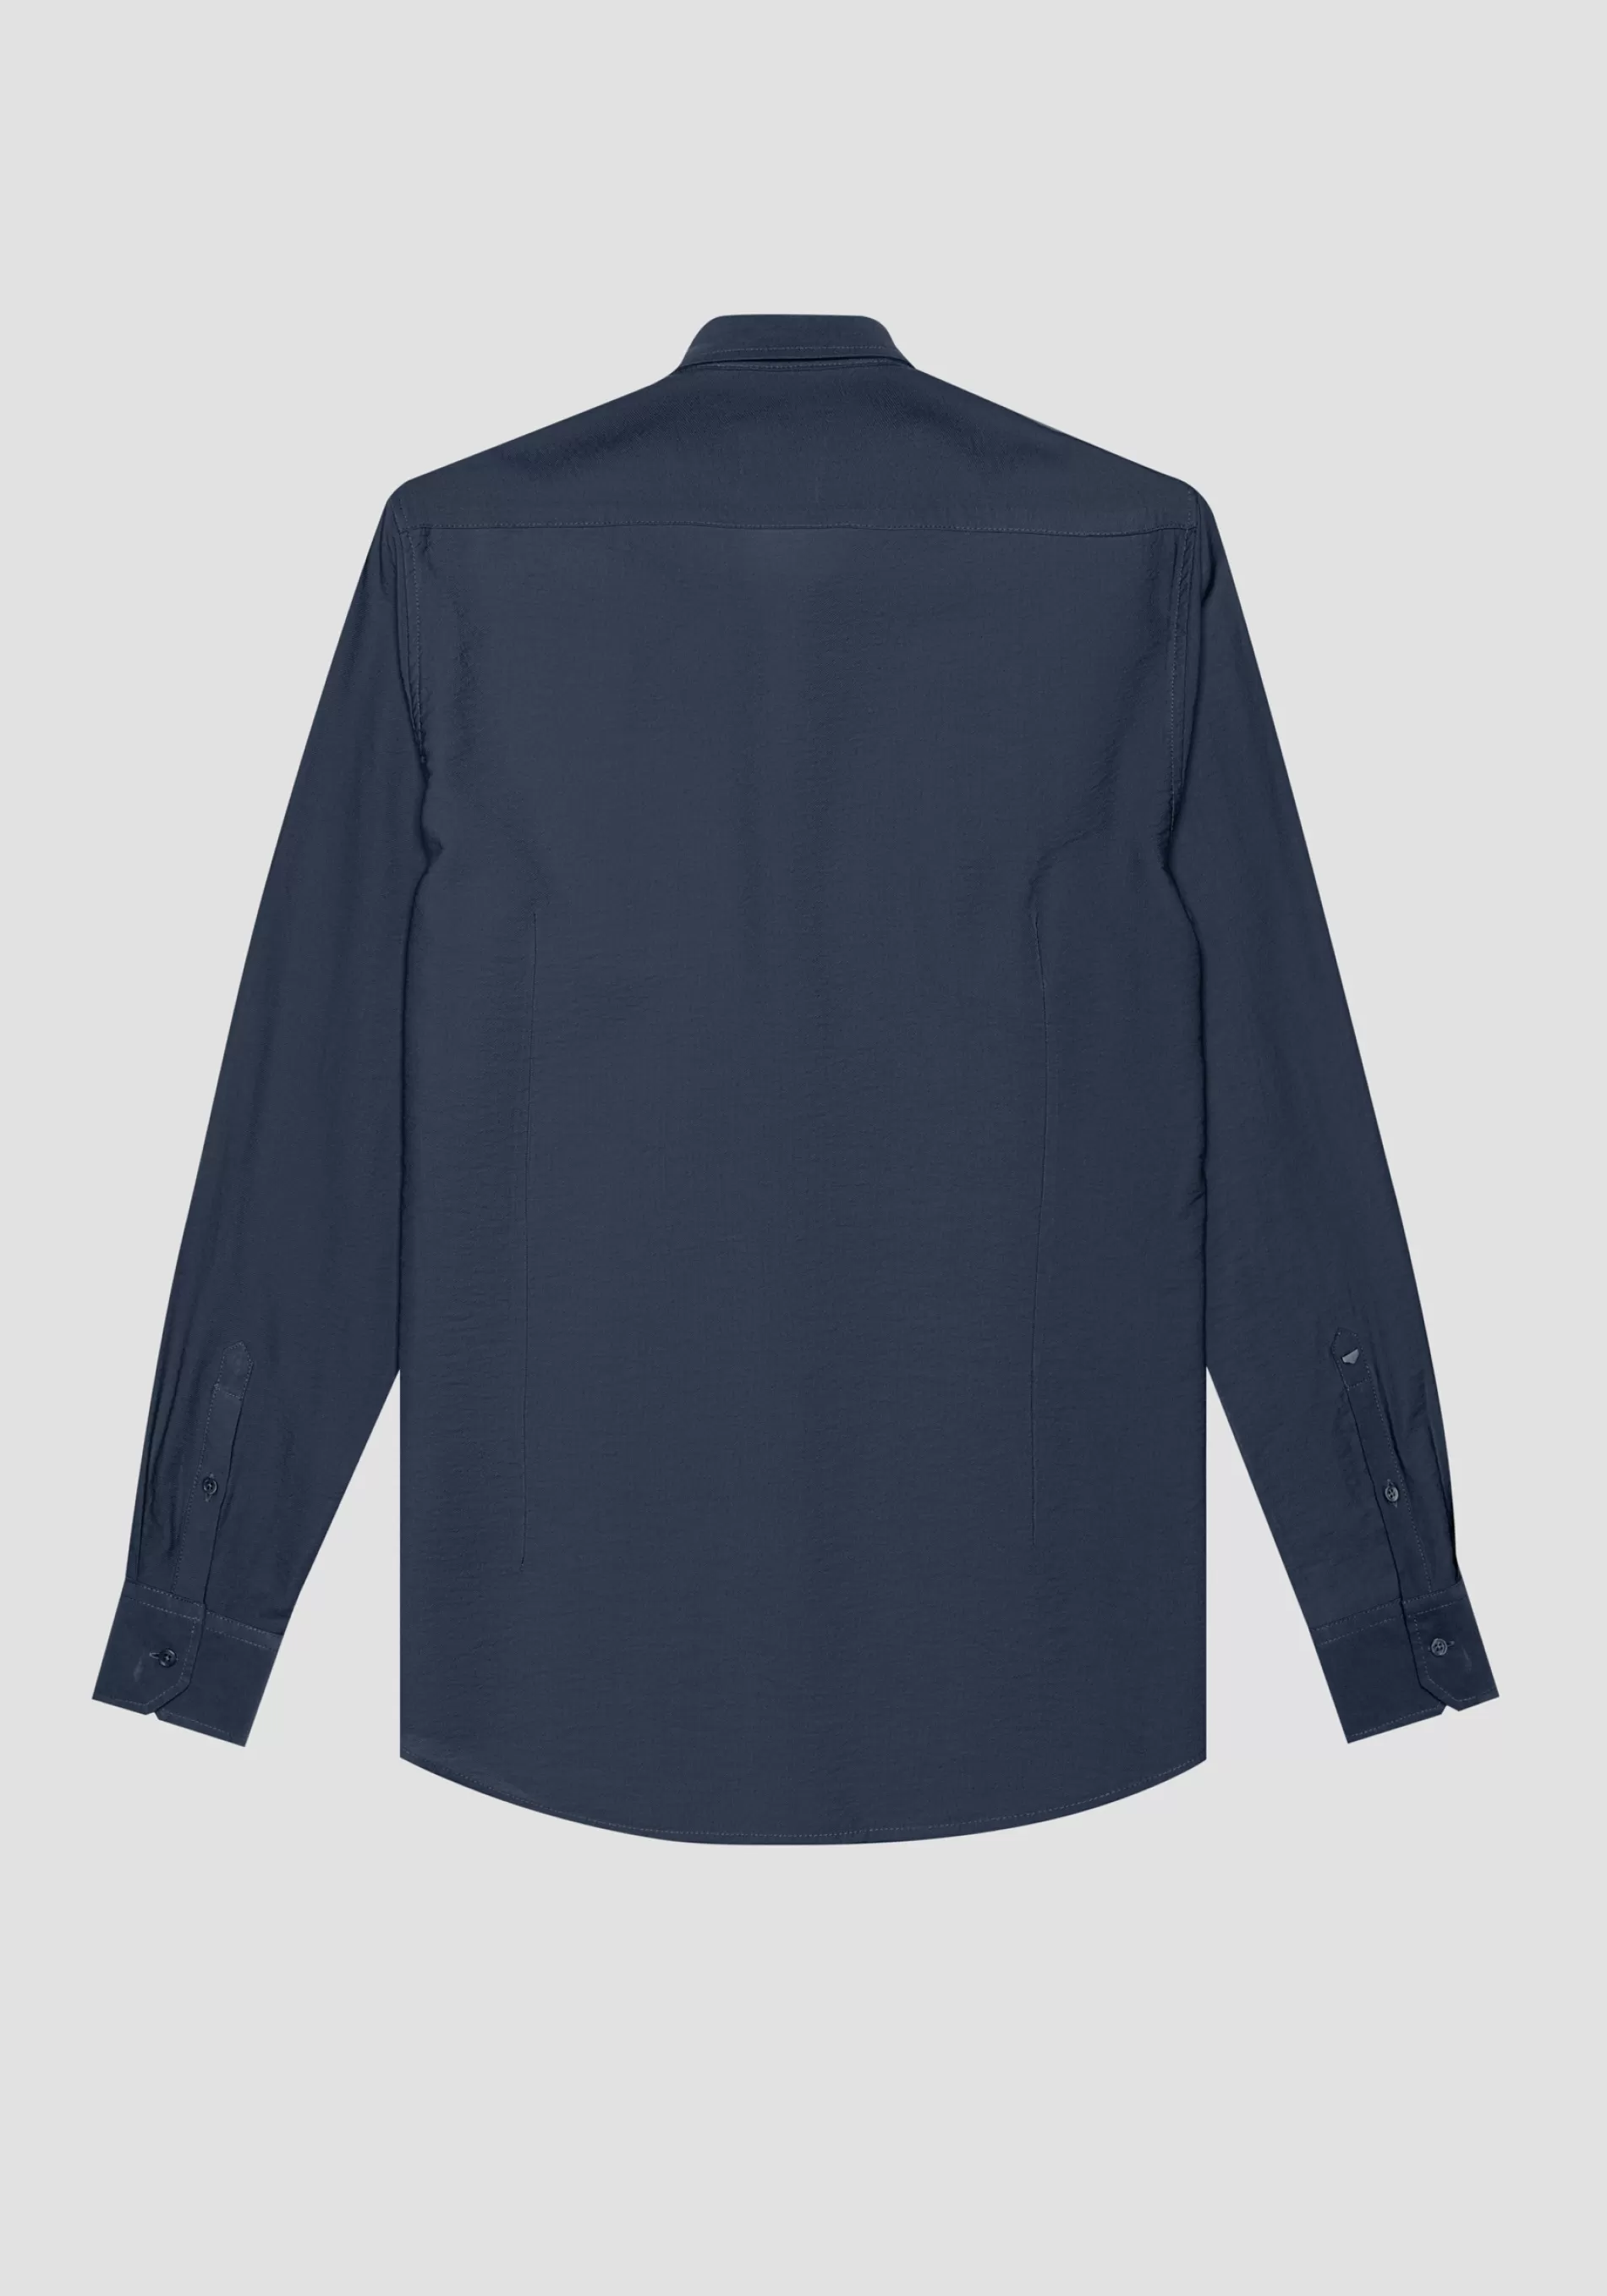 Best Sale "NAPOLI" REGULAR FIT SHIRT IN SOFT HAND VISCOSE BLEND FABRIC Shirts